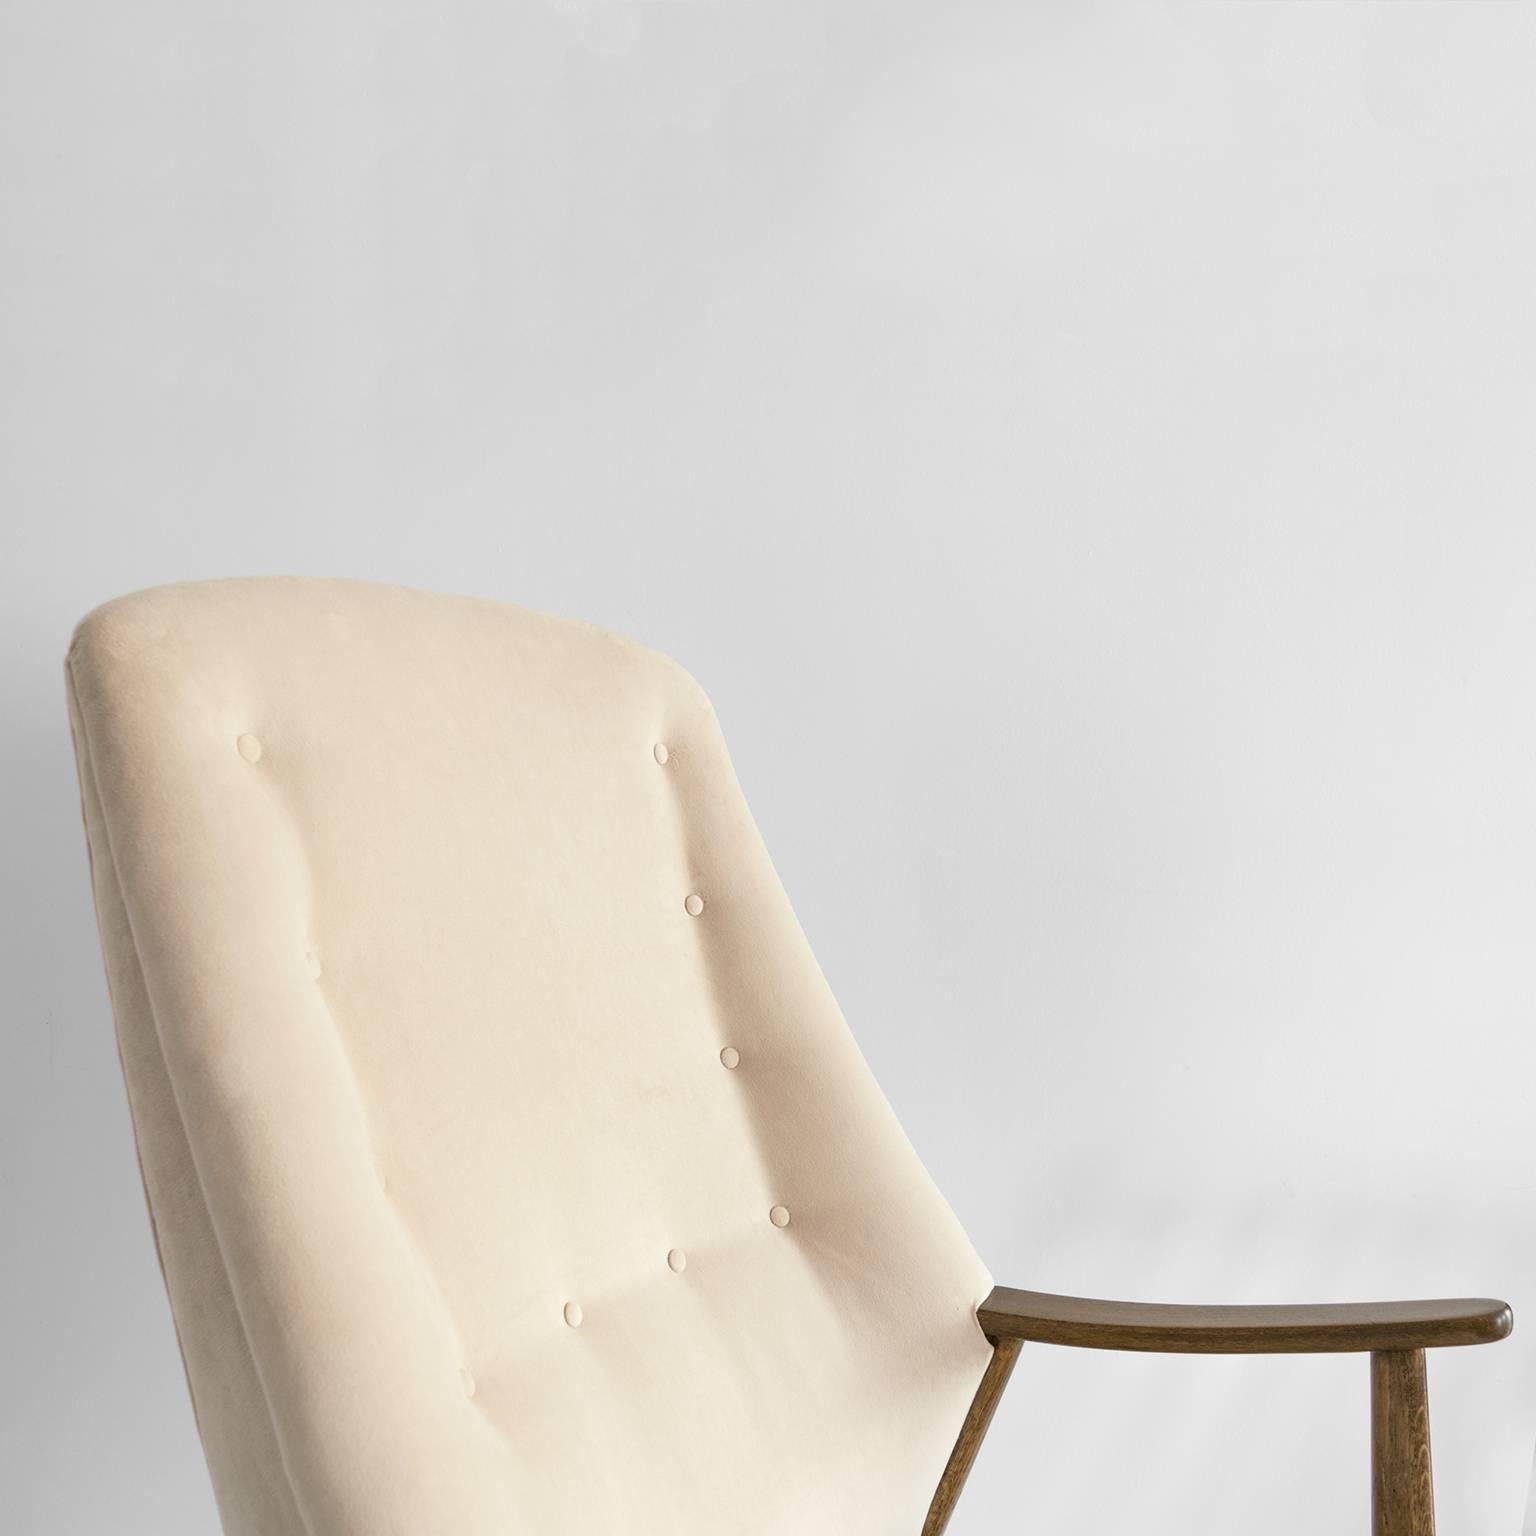 Upholstery Scandinavian Modern Pair of High Back Teak Armchairs from Denmark